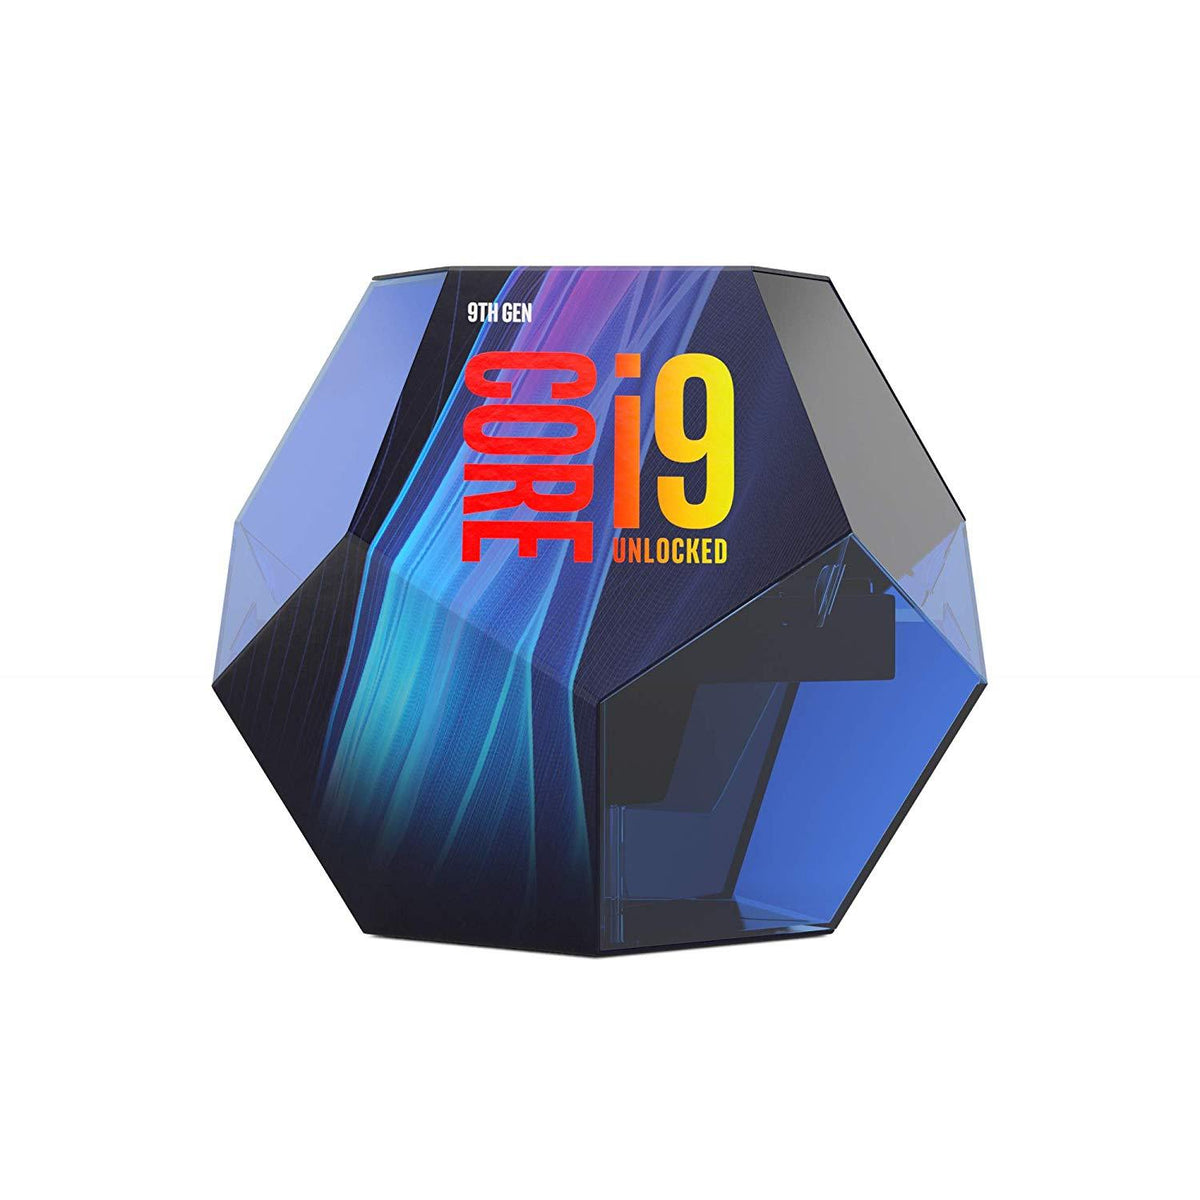 Intel Core i9-9900K Desktop Processor 8 Cores up to 5.0 GHz